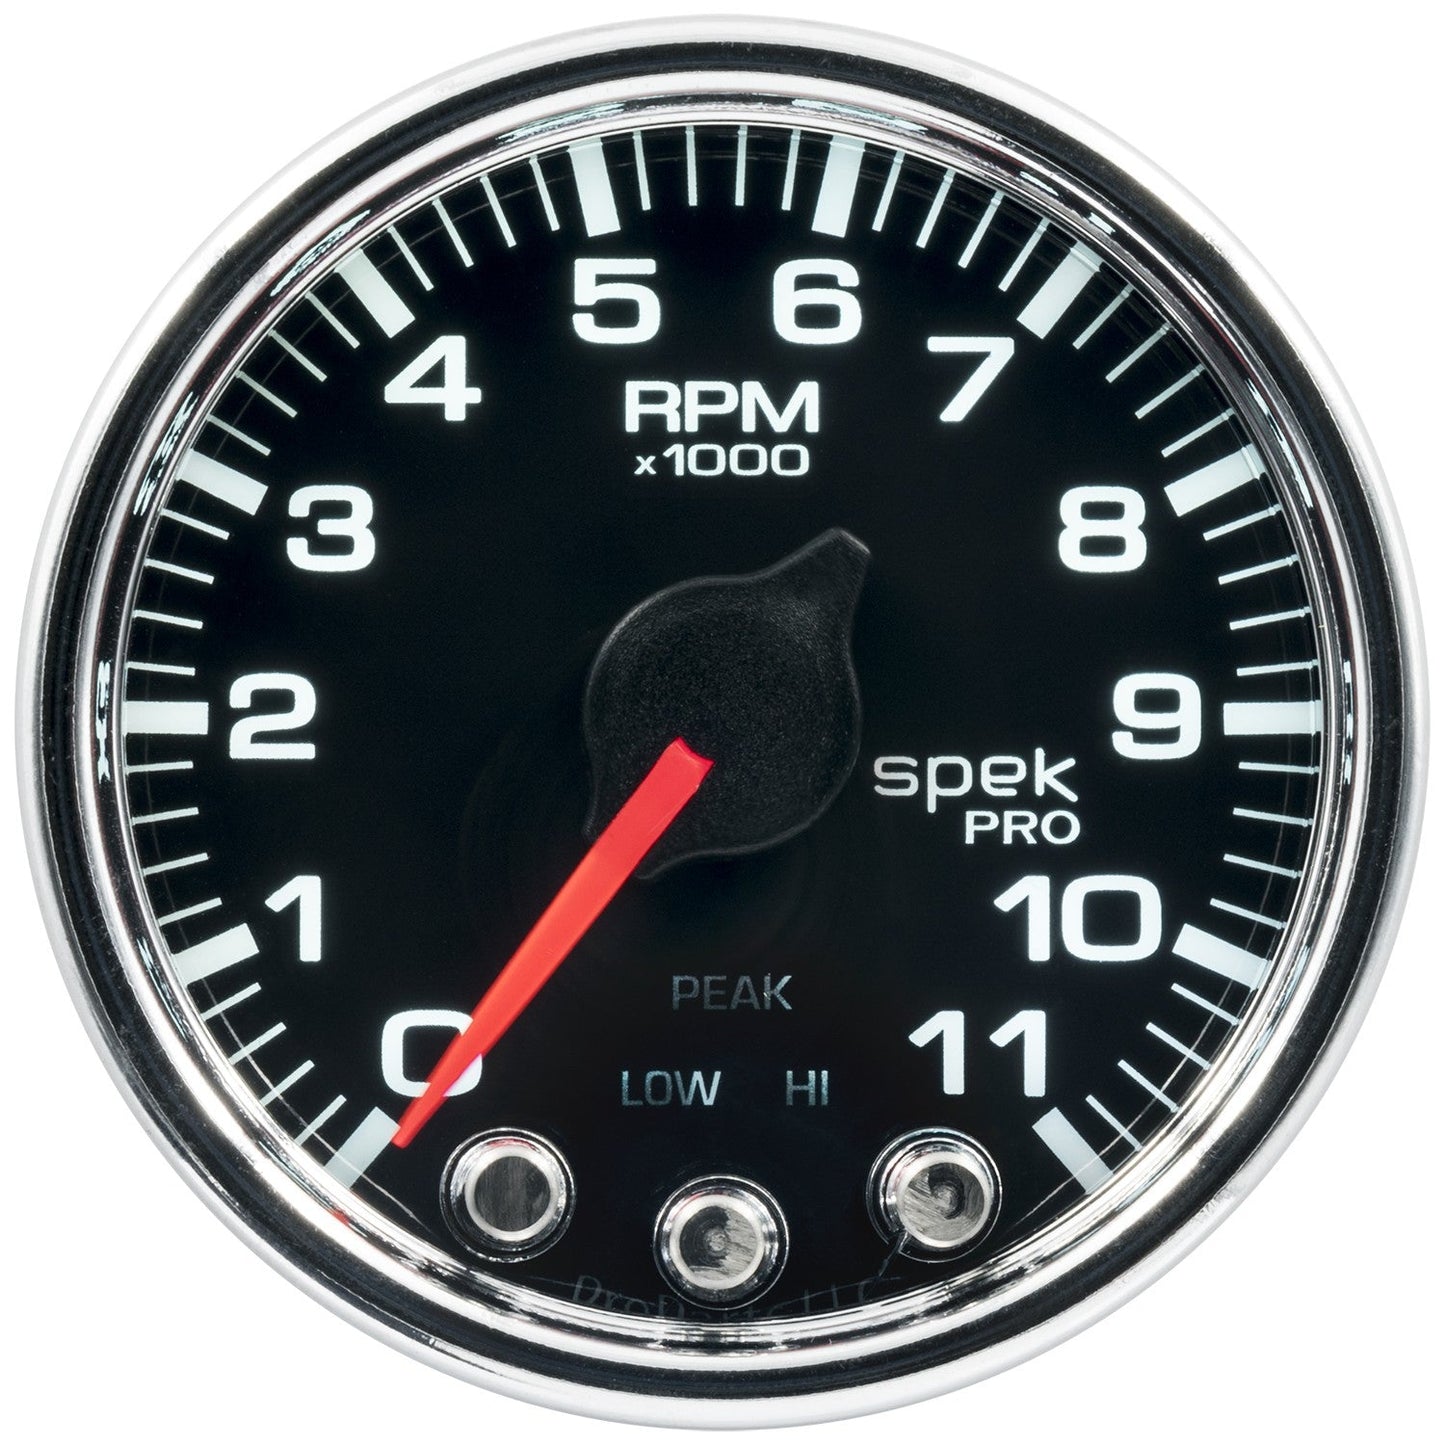 AutoMeter - TACÔMETRO IN-DASH DE 2-1/16", 0-11.000 RPM, SPEK-PRO, DIAL PRETO, BEZEL CROMADO, LENTE CLARA (P33631)